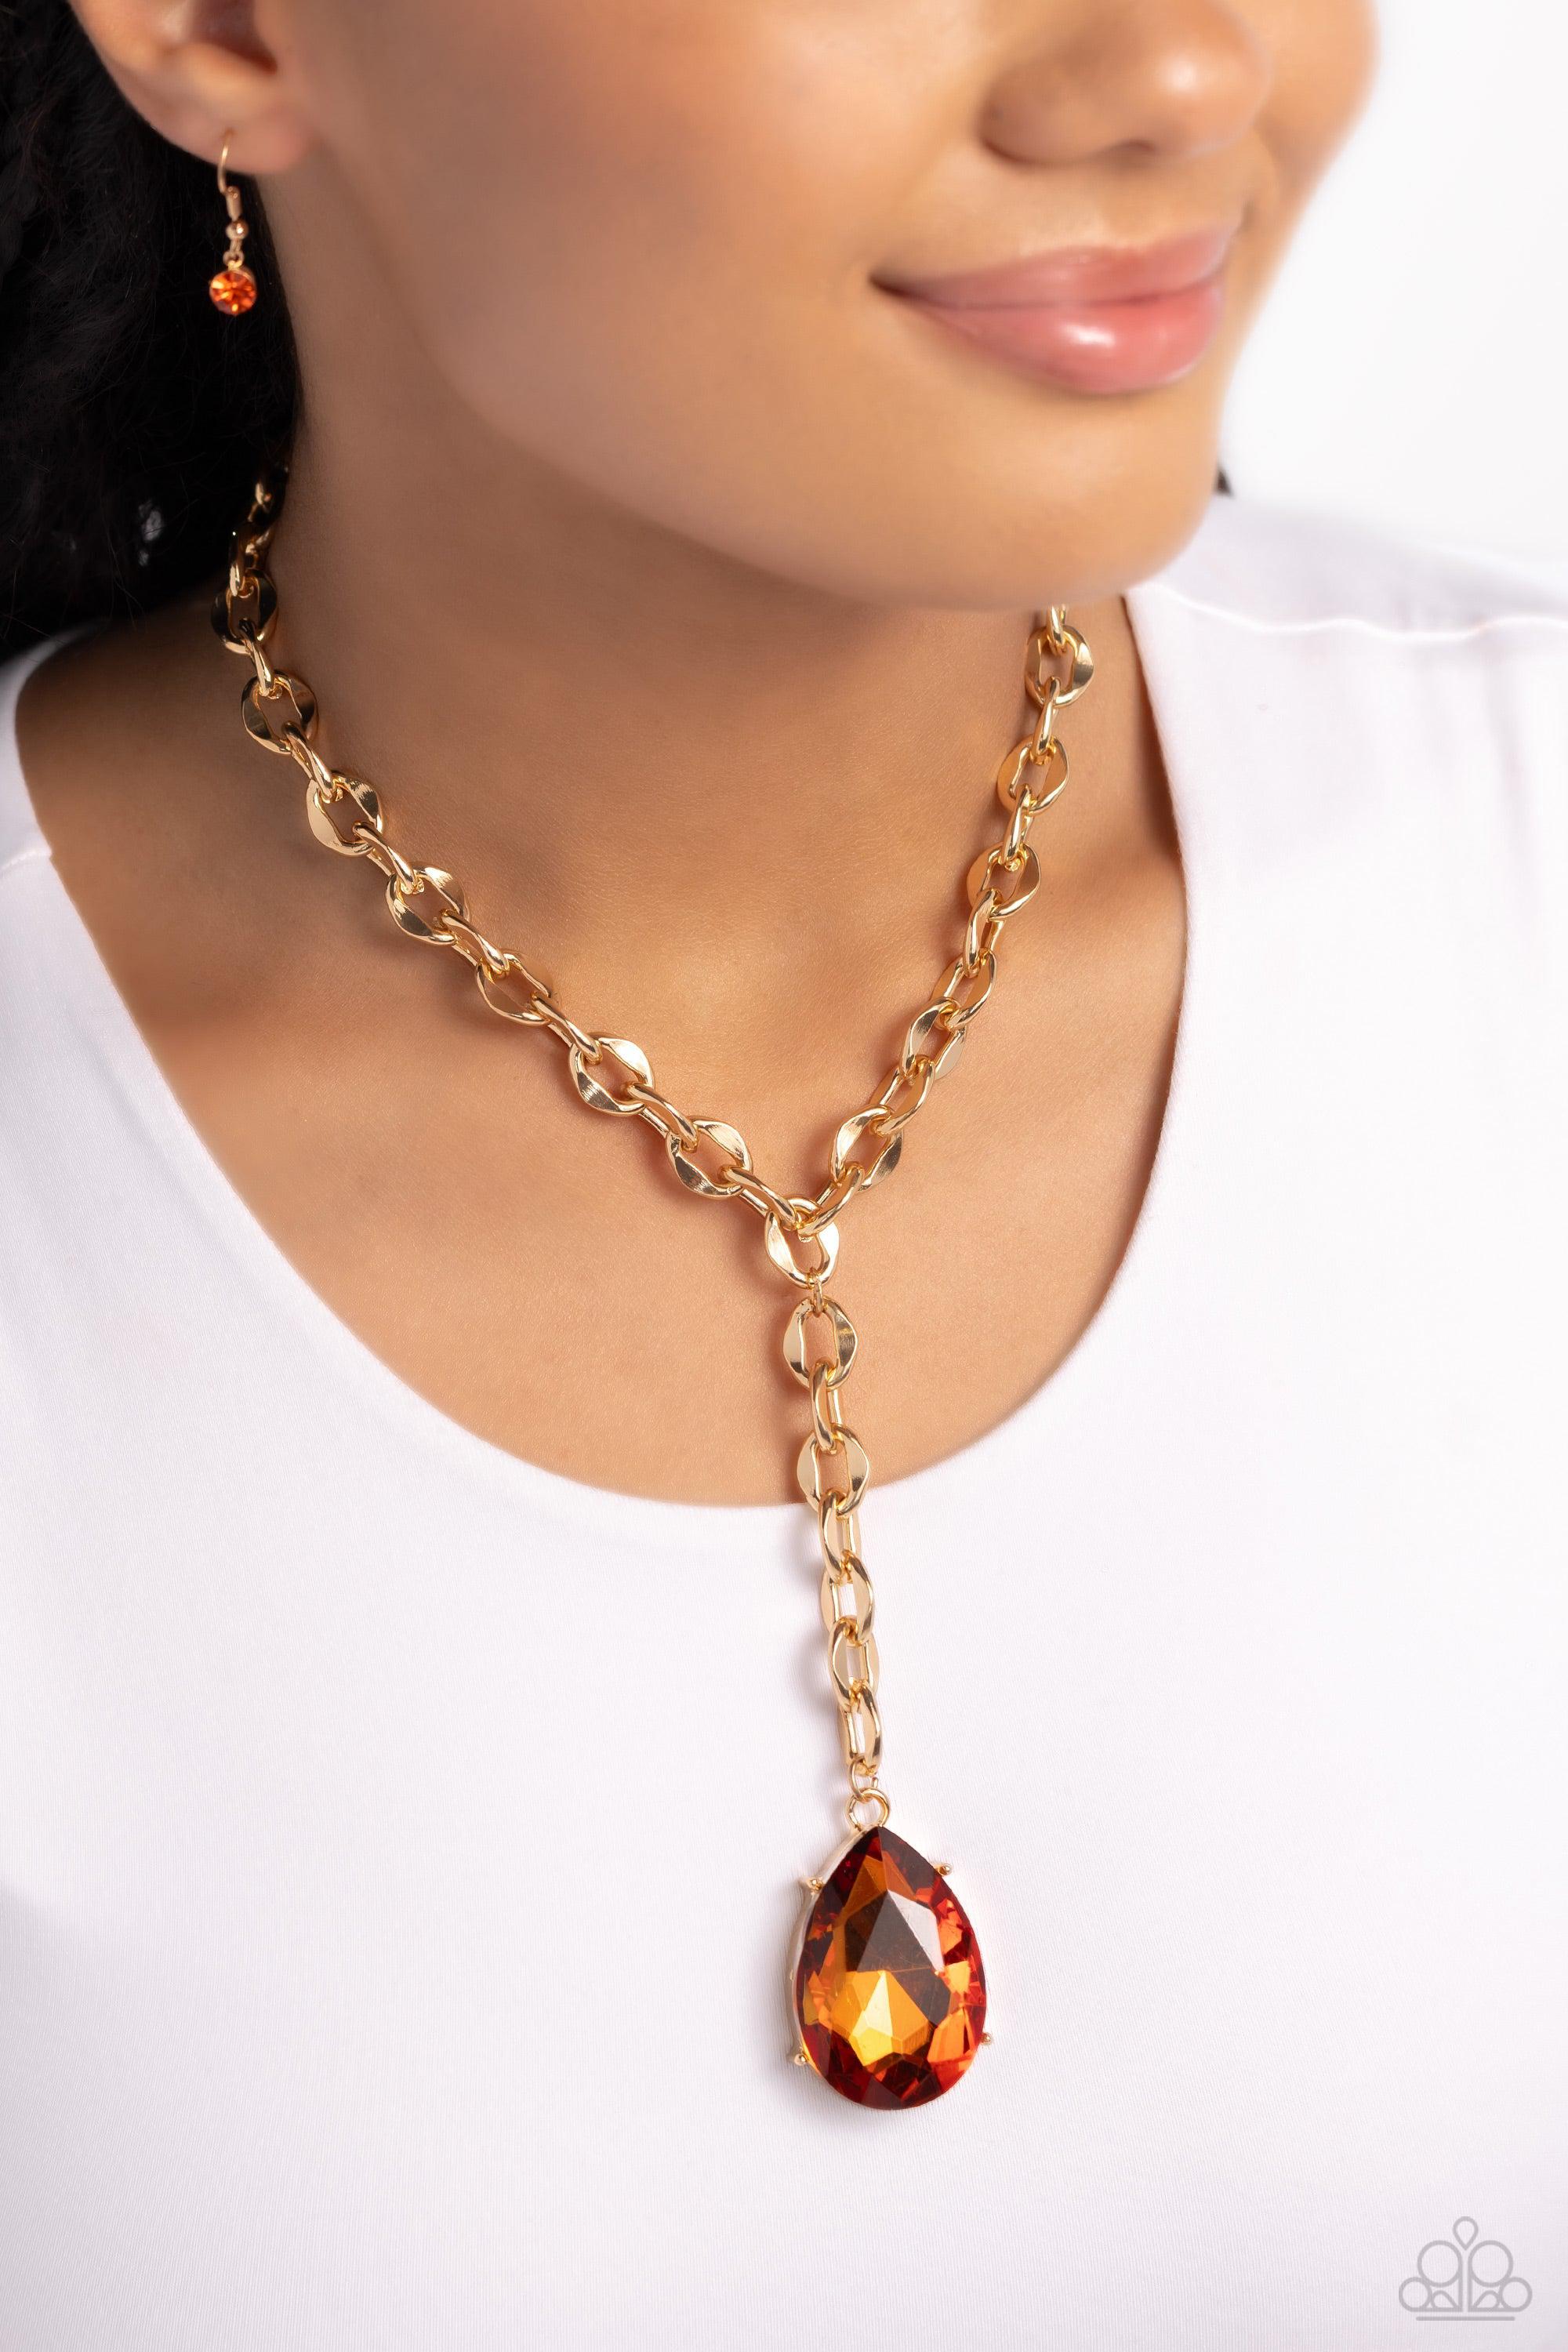 Benevolent Bling Gold & Topaz Rhinestone Necklace - Paparazzi Accessories- lightbox - CarasShop.com - $5 Jewelry by Cara Jewels